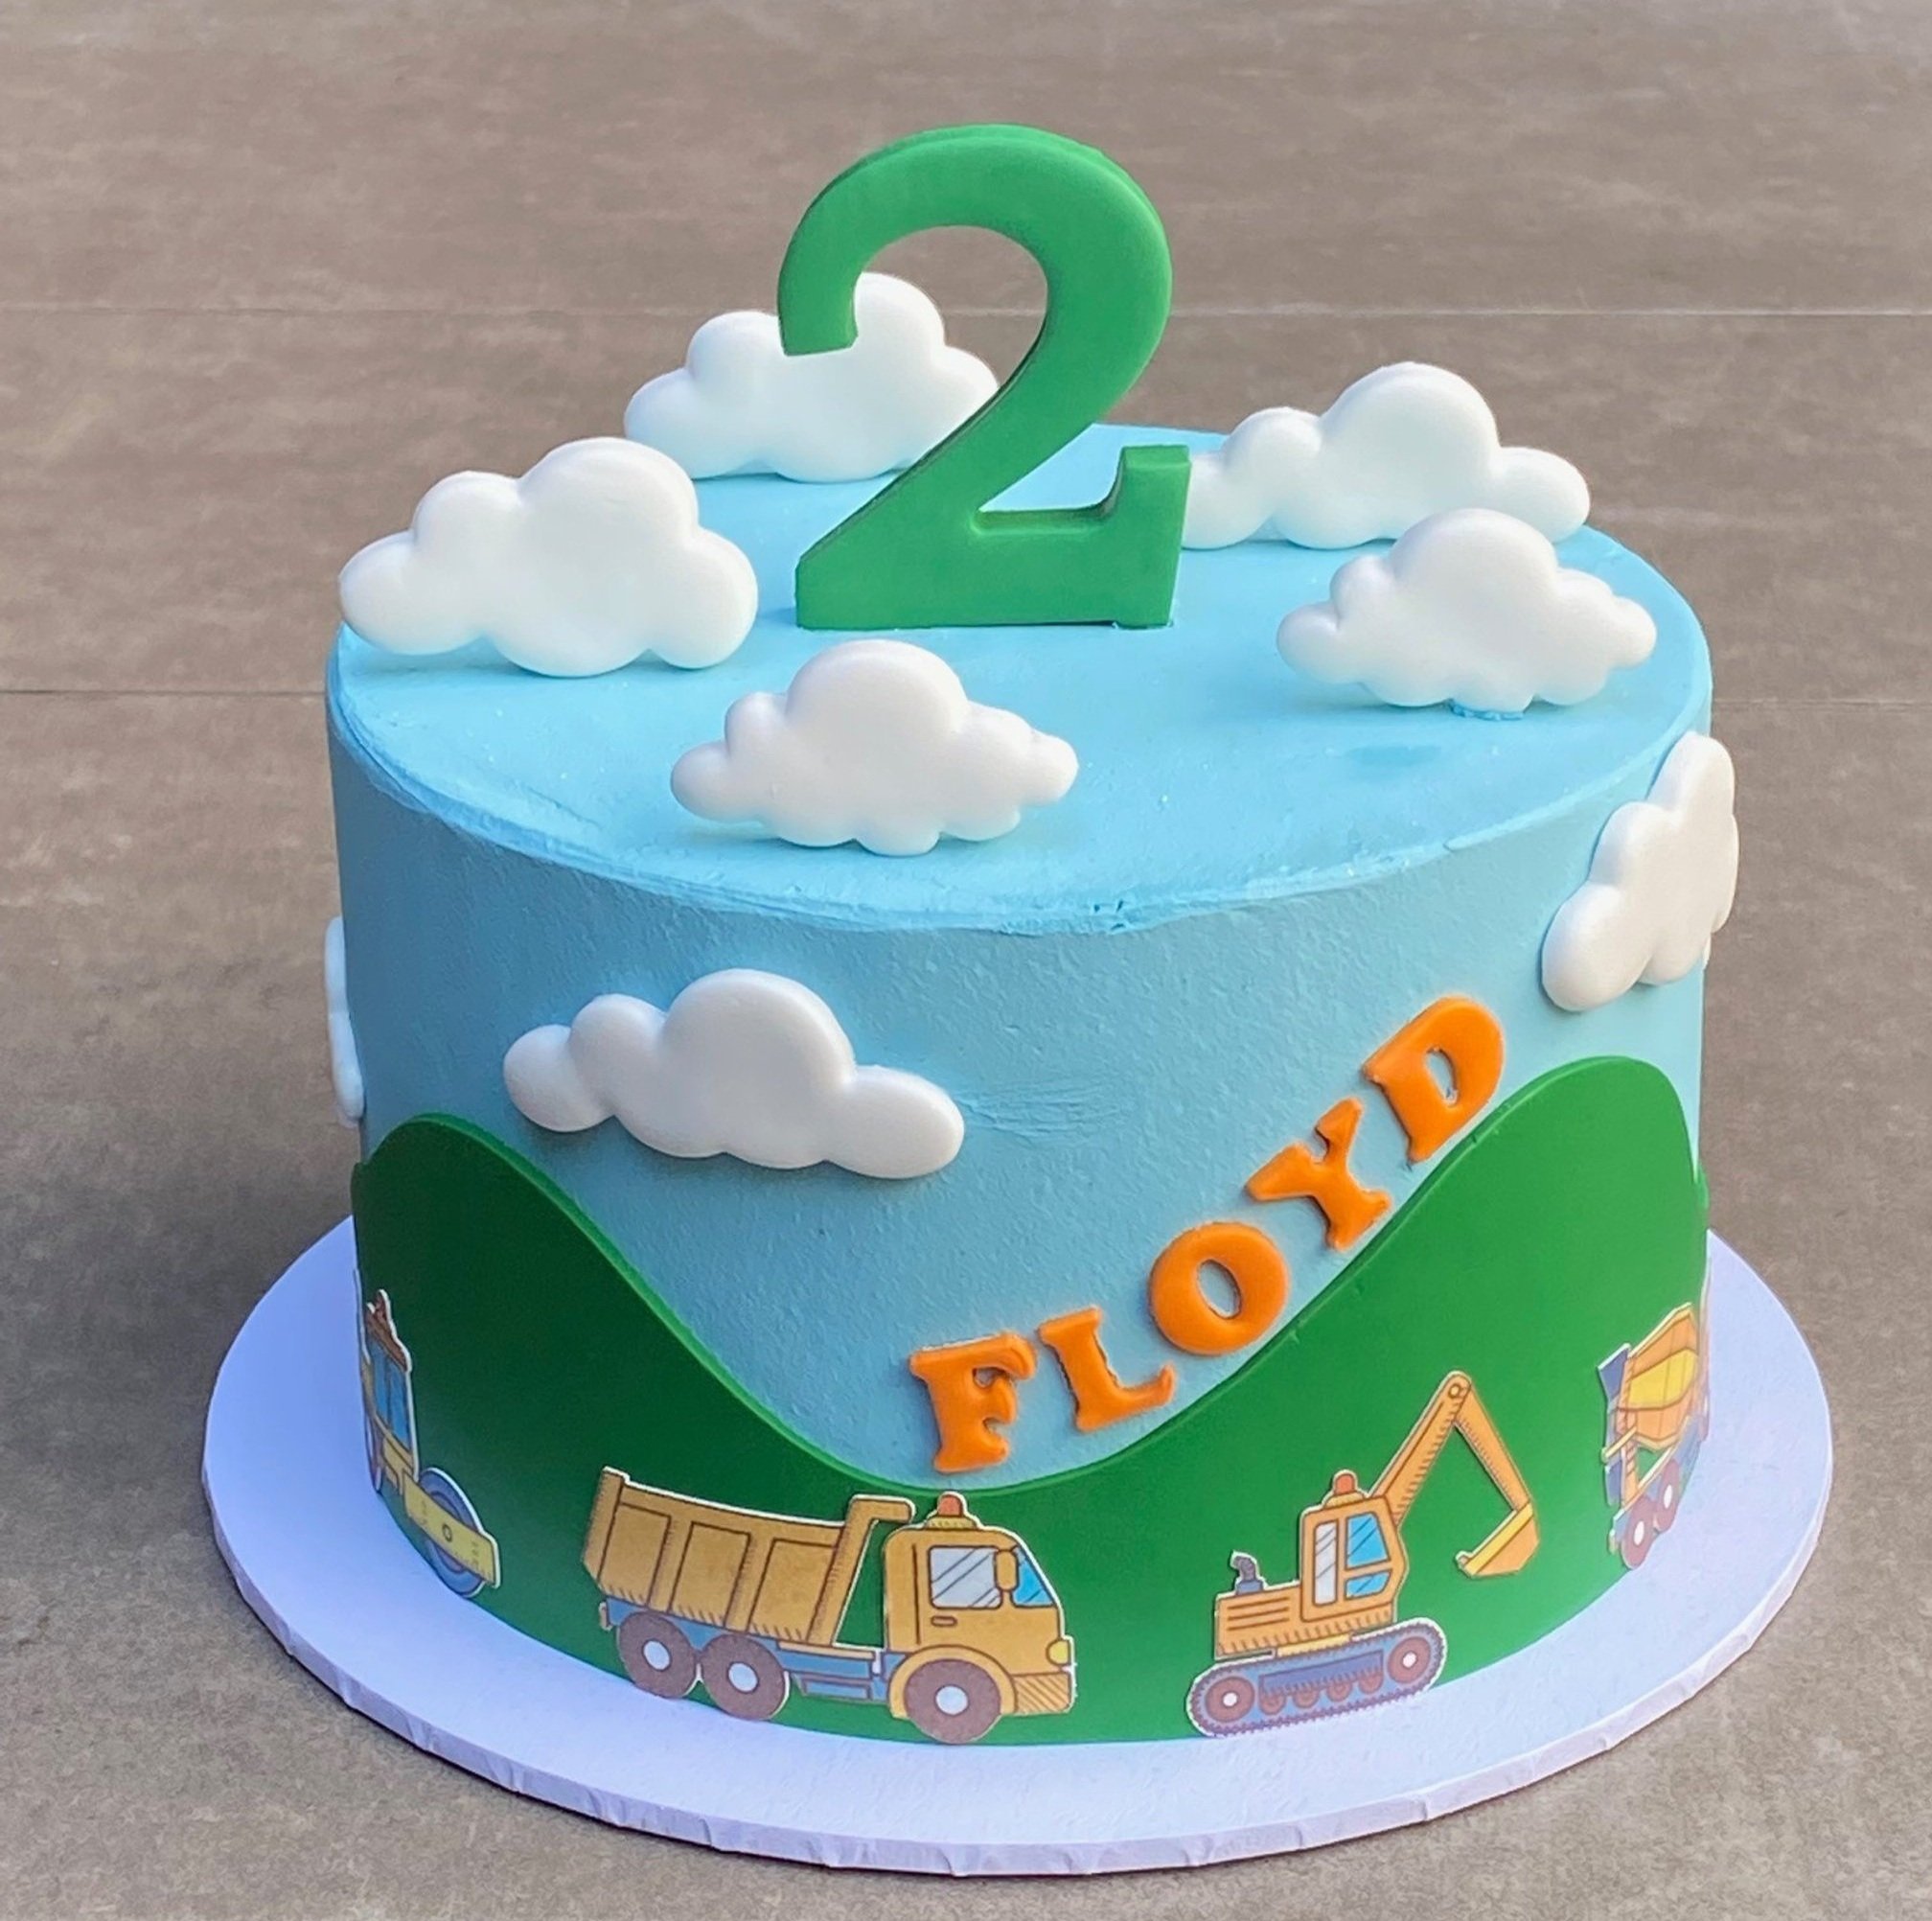 vanillapodspecialtycakes-brisbanecakes-bestcakesintown-buttercream-birthdaycake-noveltycakes-cupcakes-kidscakes+%2829%29.jpg